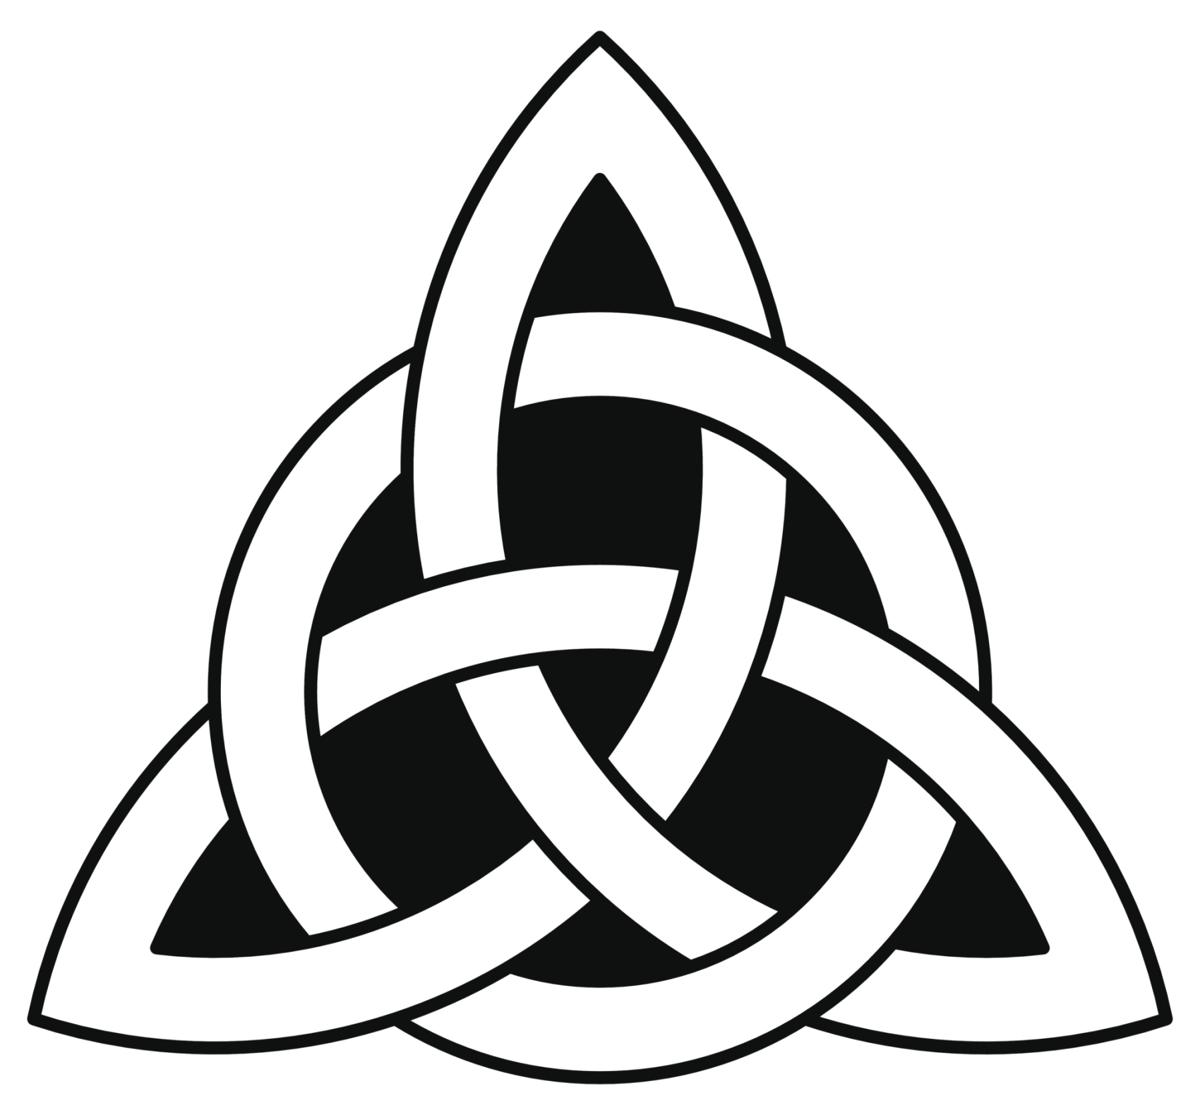 Irish Celtic Symbols And Meanings Chart